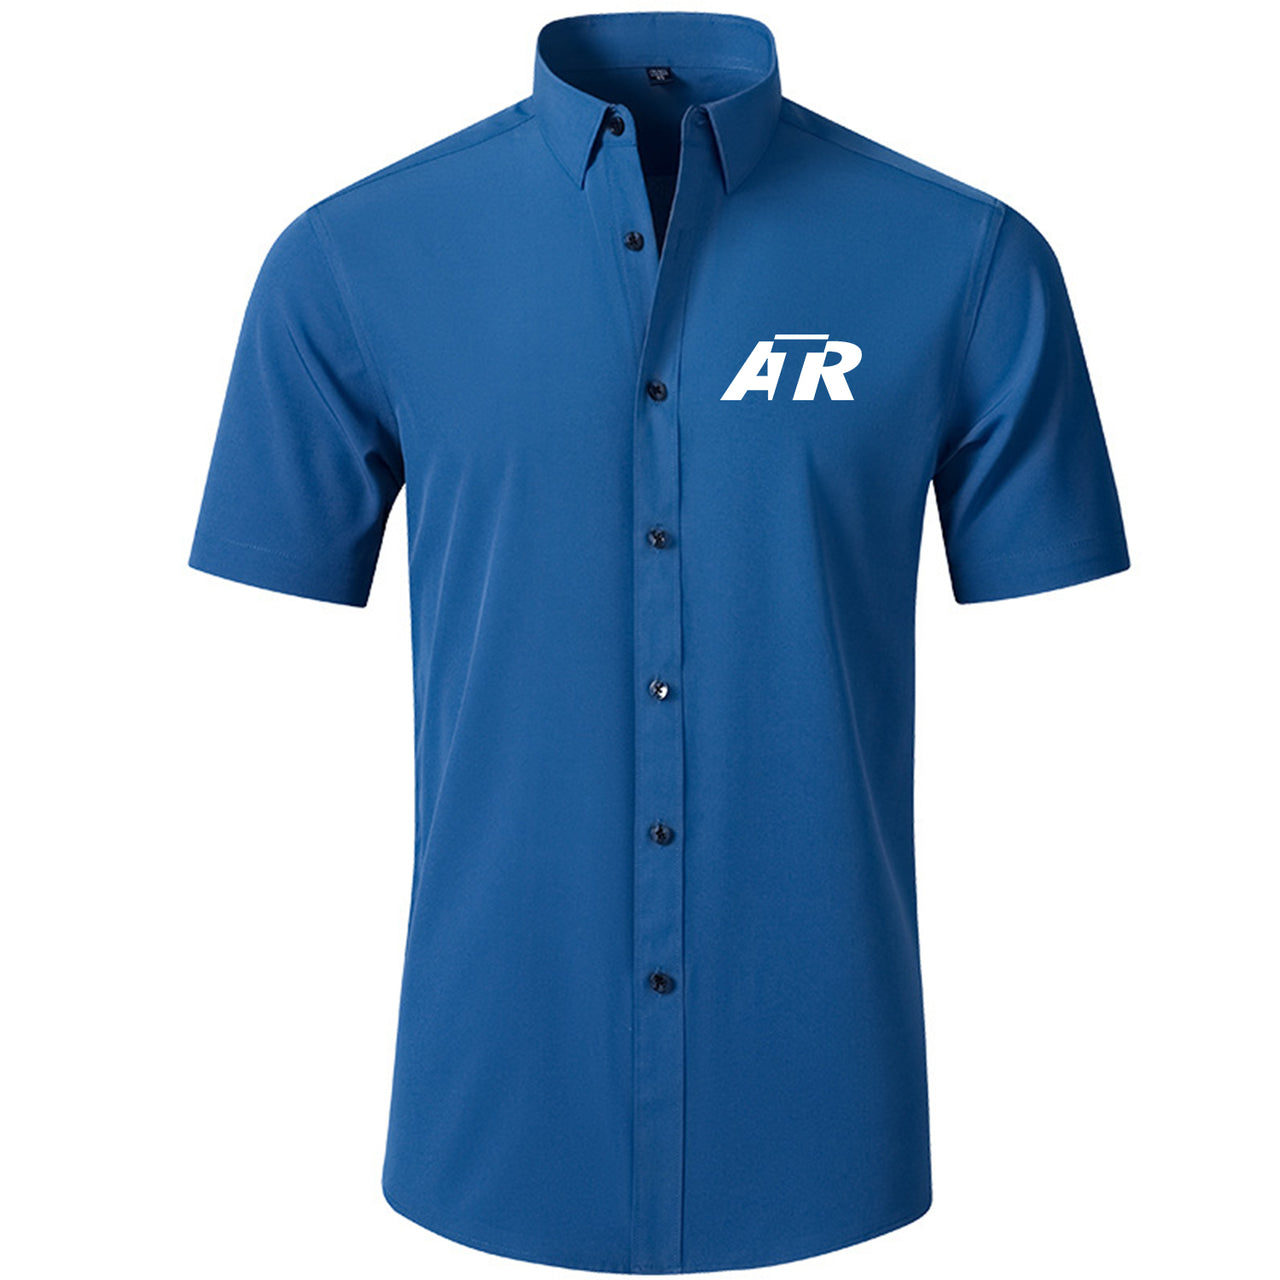 ATR & Text Designed Short Sleeve Shirts